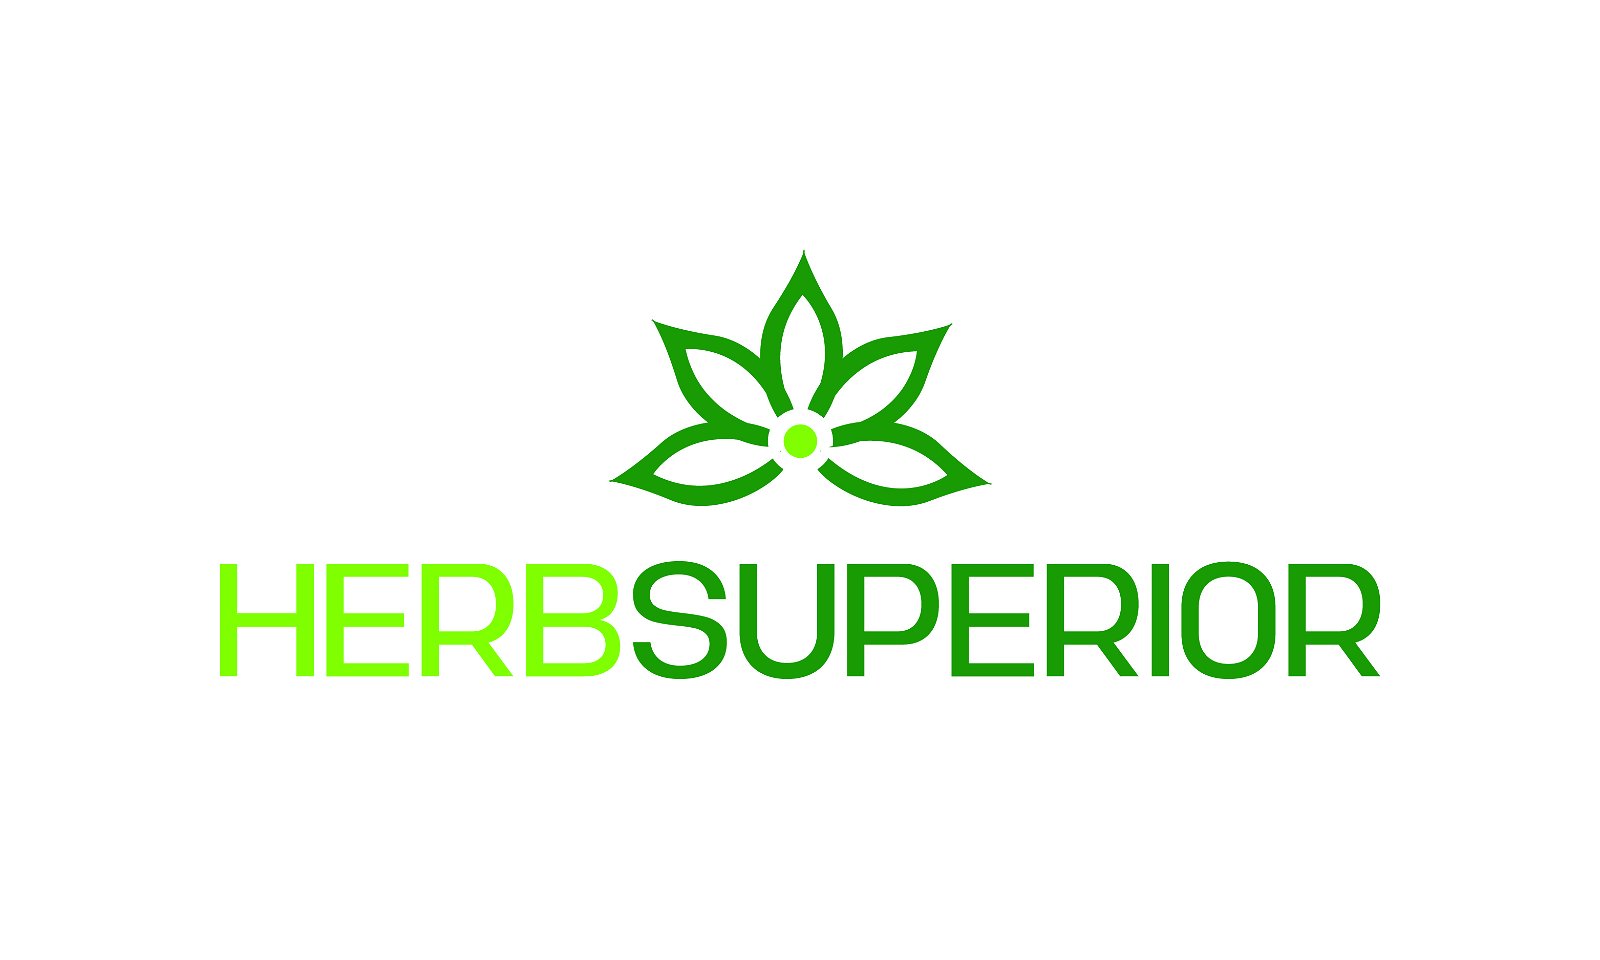 HerbSuperior.com - Creative brandable domain for sale